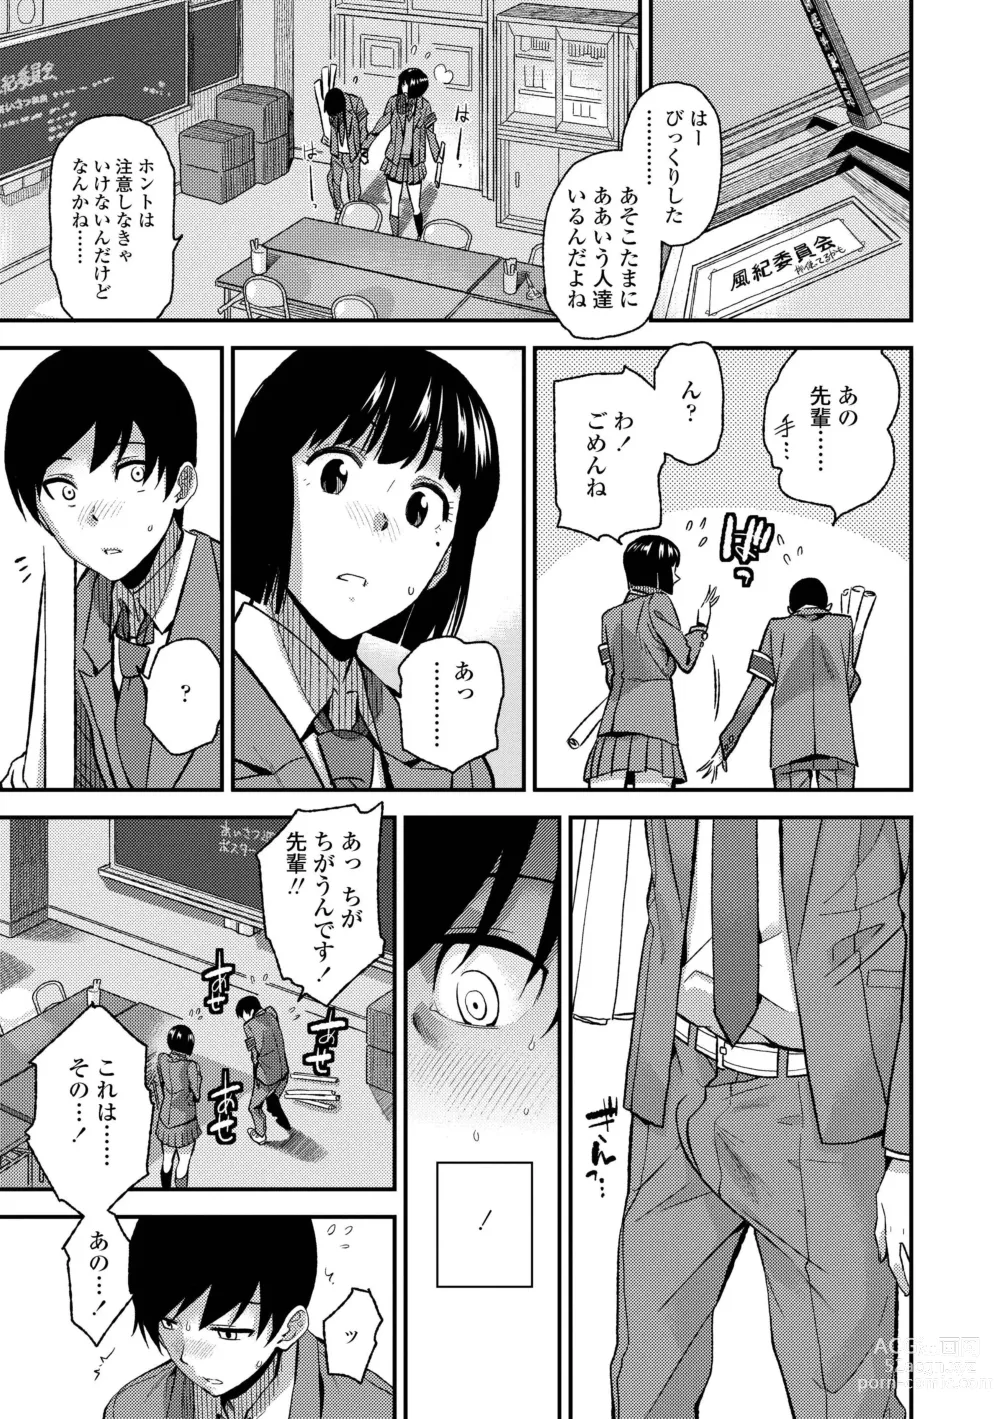 Page 159 of manga BorderLine